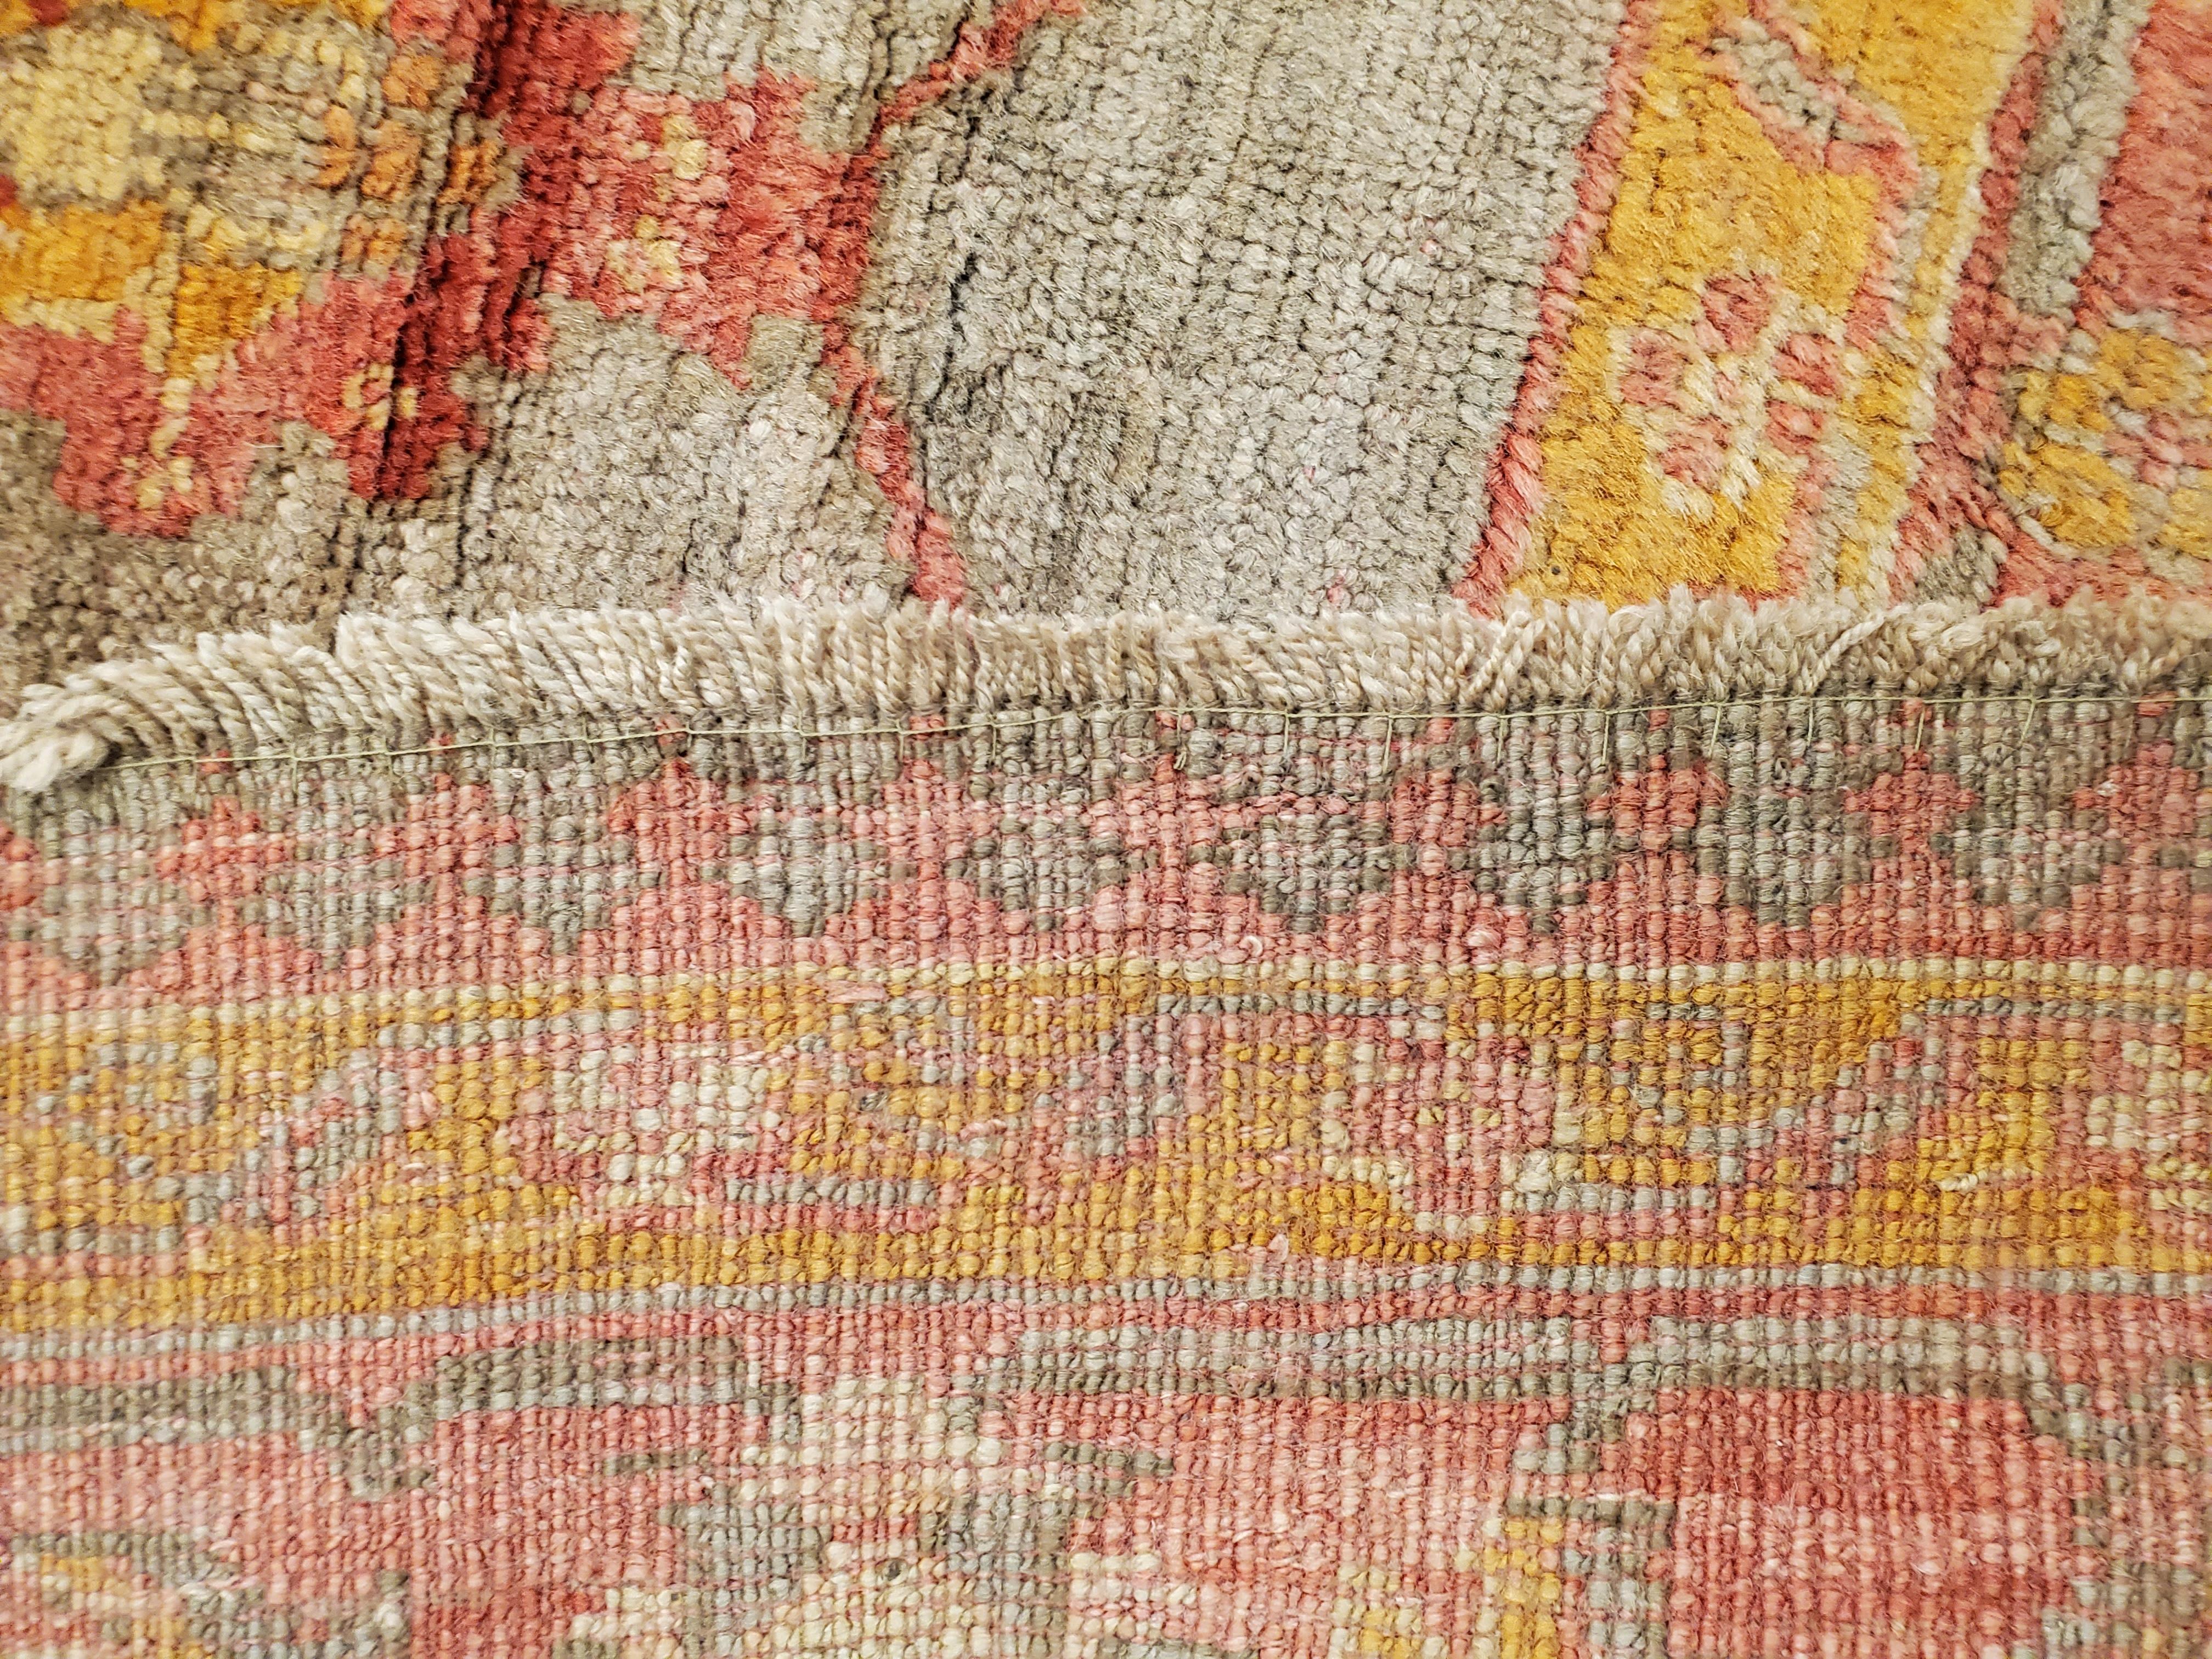 Antique Oushak Carpet, Handmade Turkish Oriental Rug, Saffron, Coral, Light Blue In Excellent Condition For Sale In Port Washington, NY